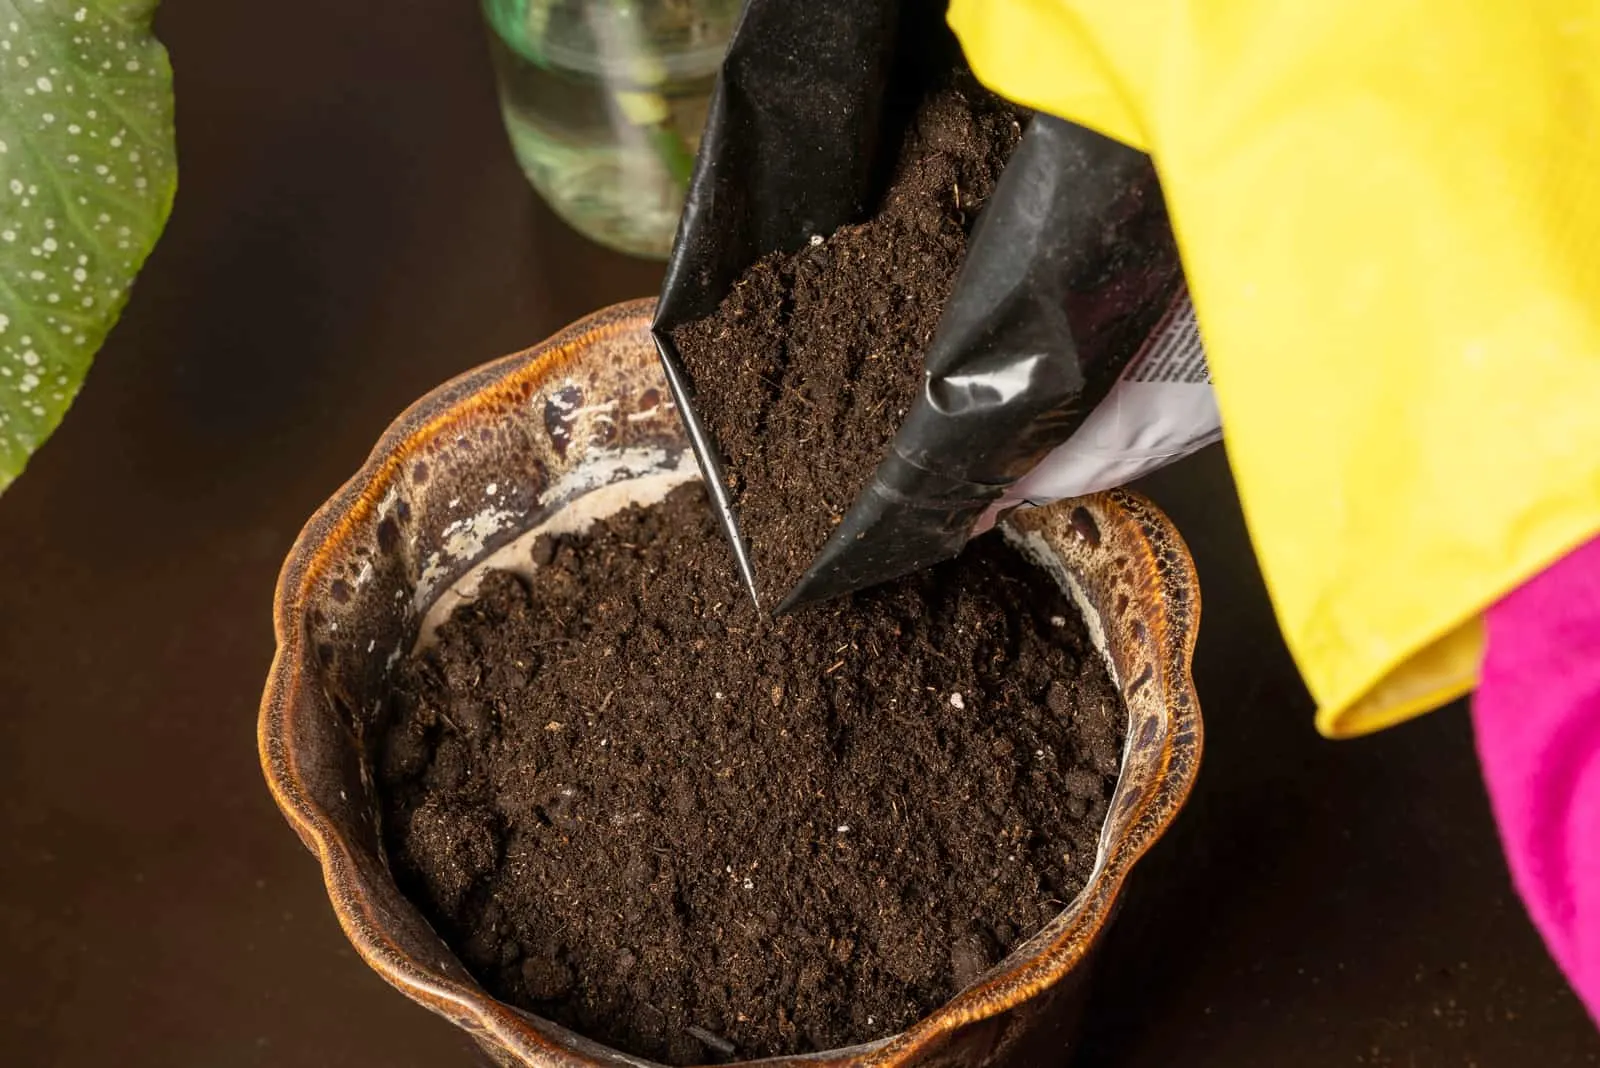 Hands in rubber gloves pour soil into a ceramic flower pot